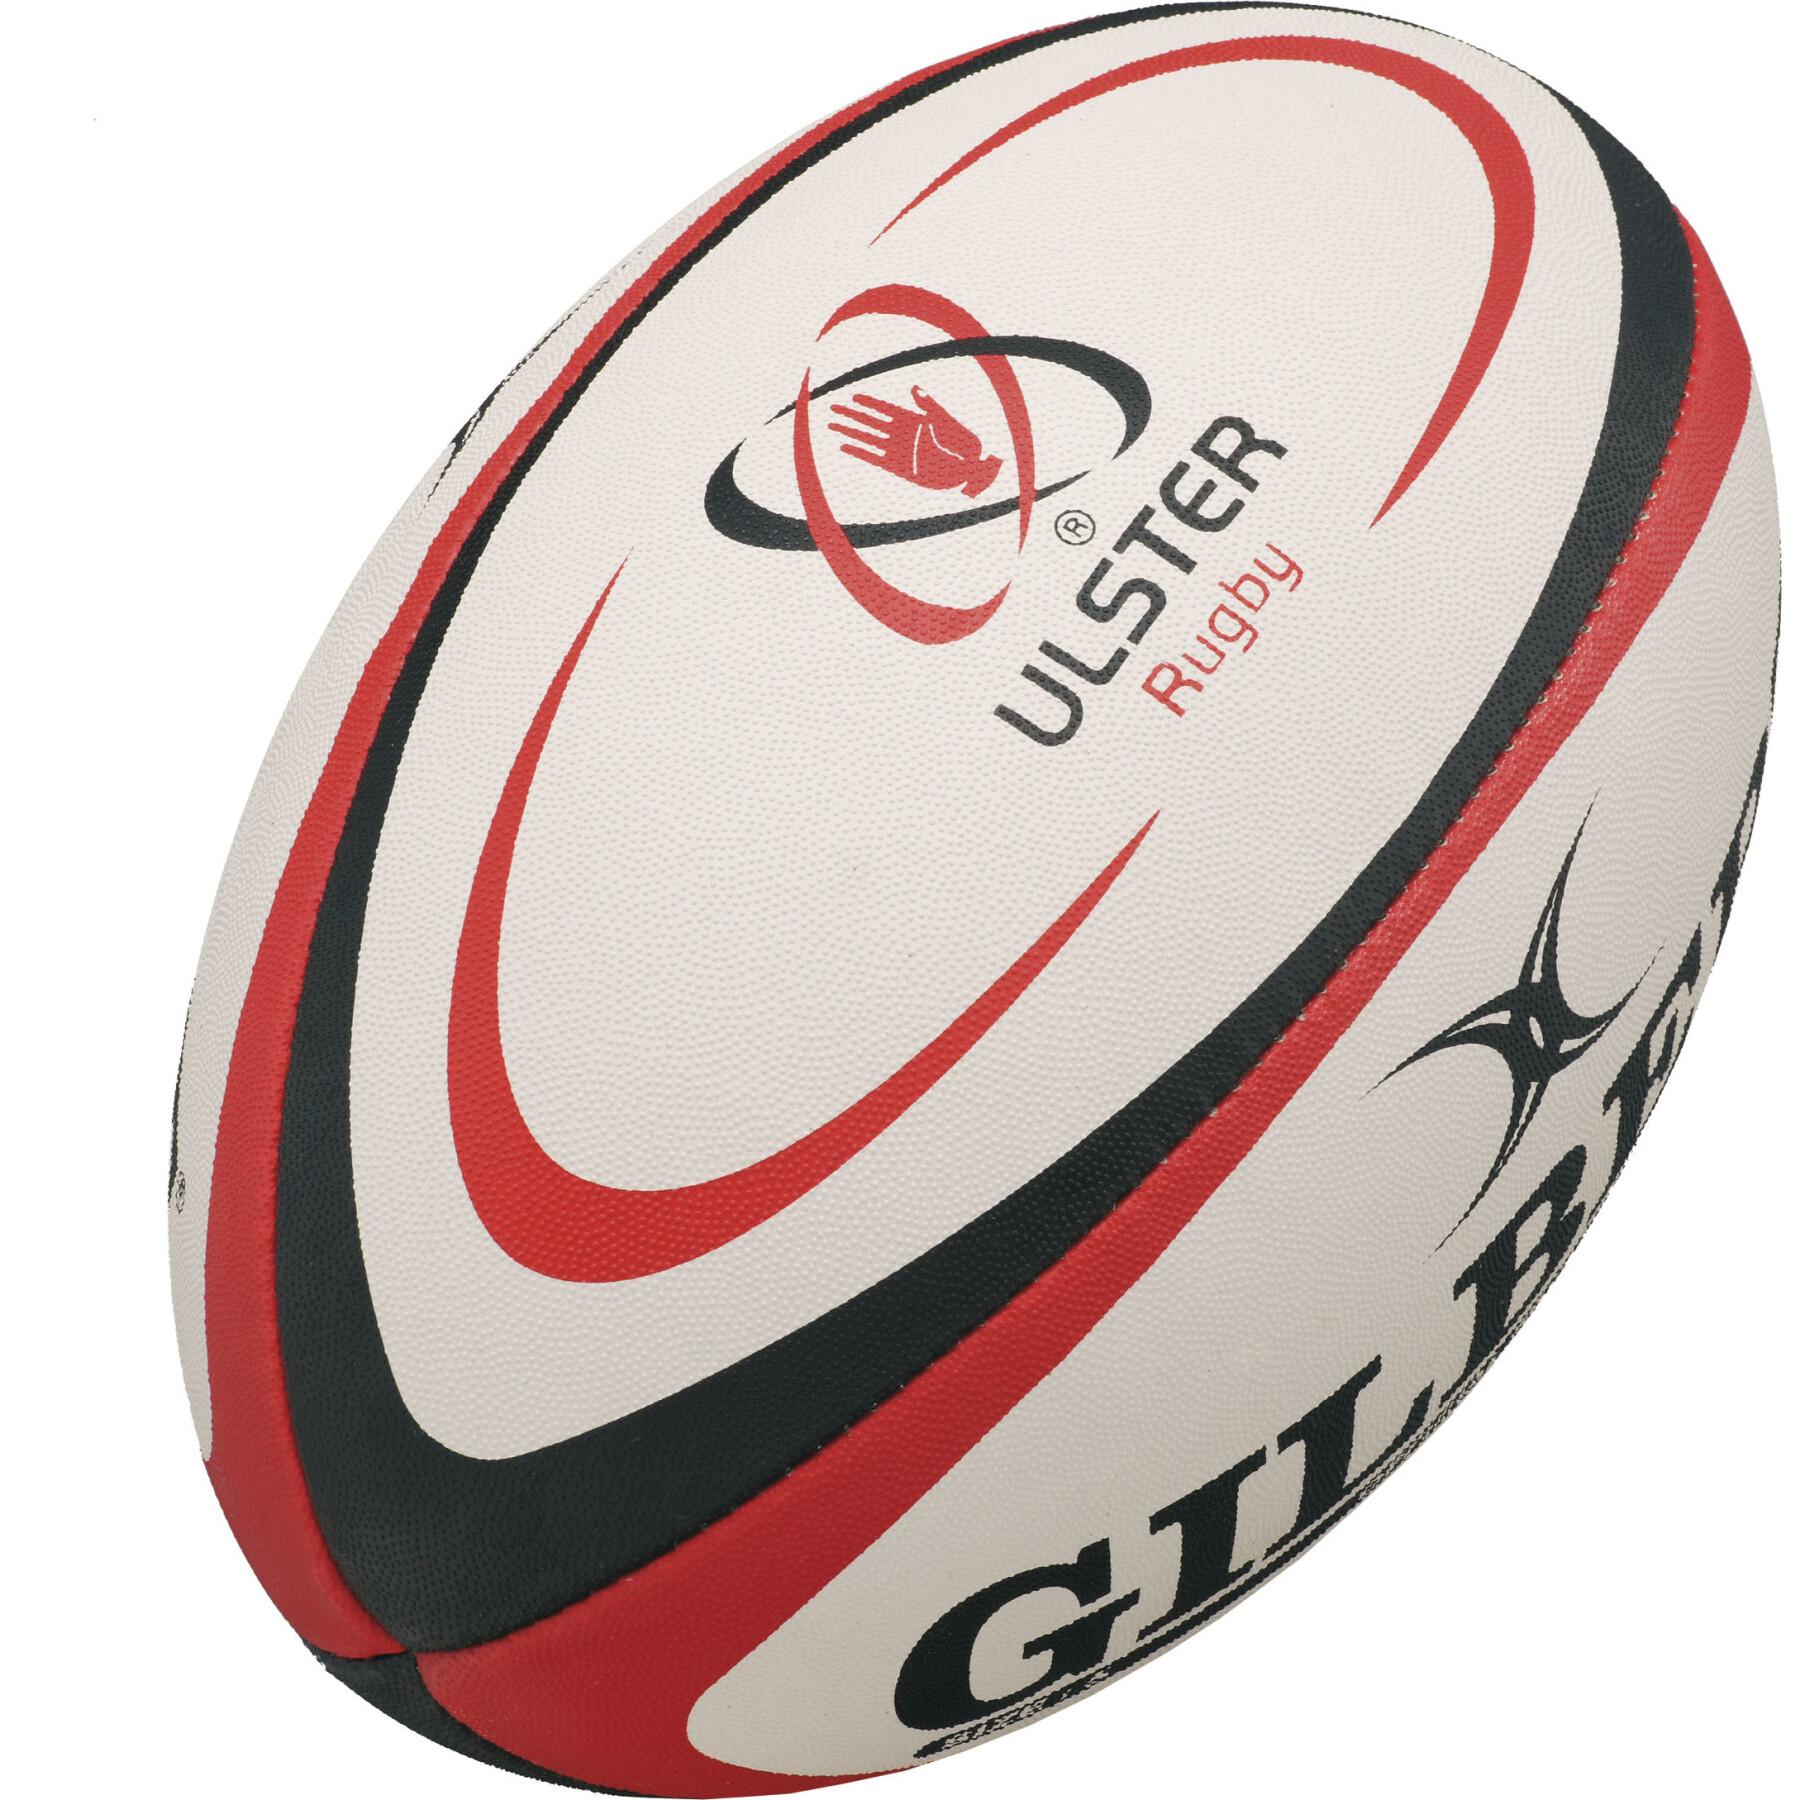 Mini piłka do rugby Gilbert Ulster (rozmiar 1)